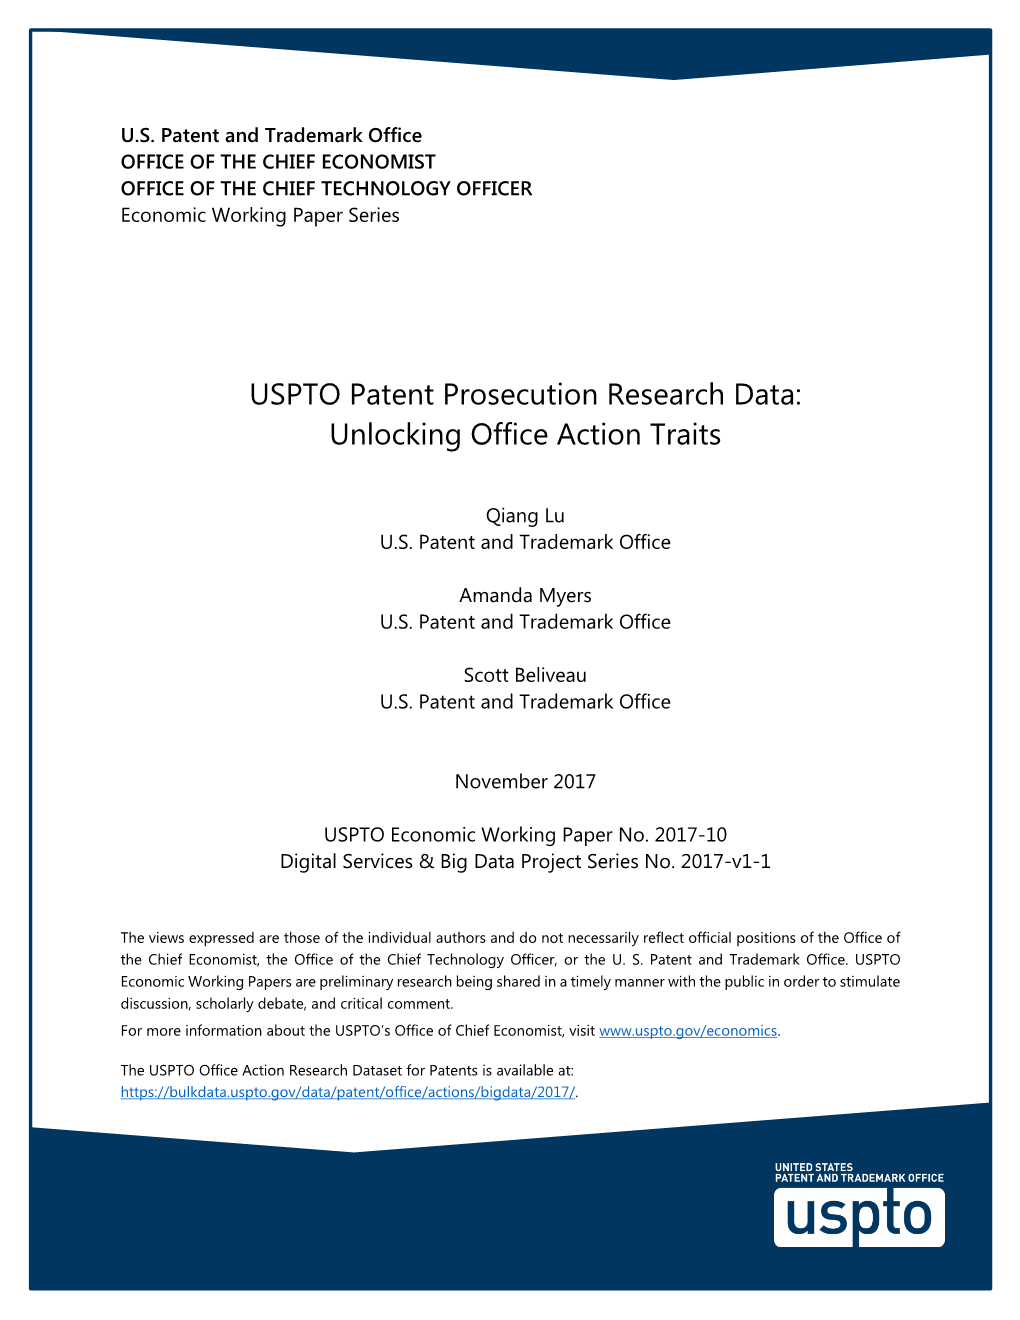 USPTO Patent Prosecution Research Data: Unlocking Office Action Traits